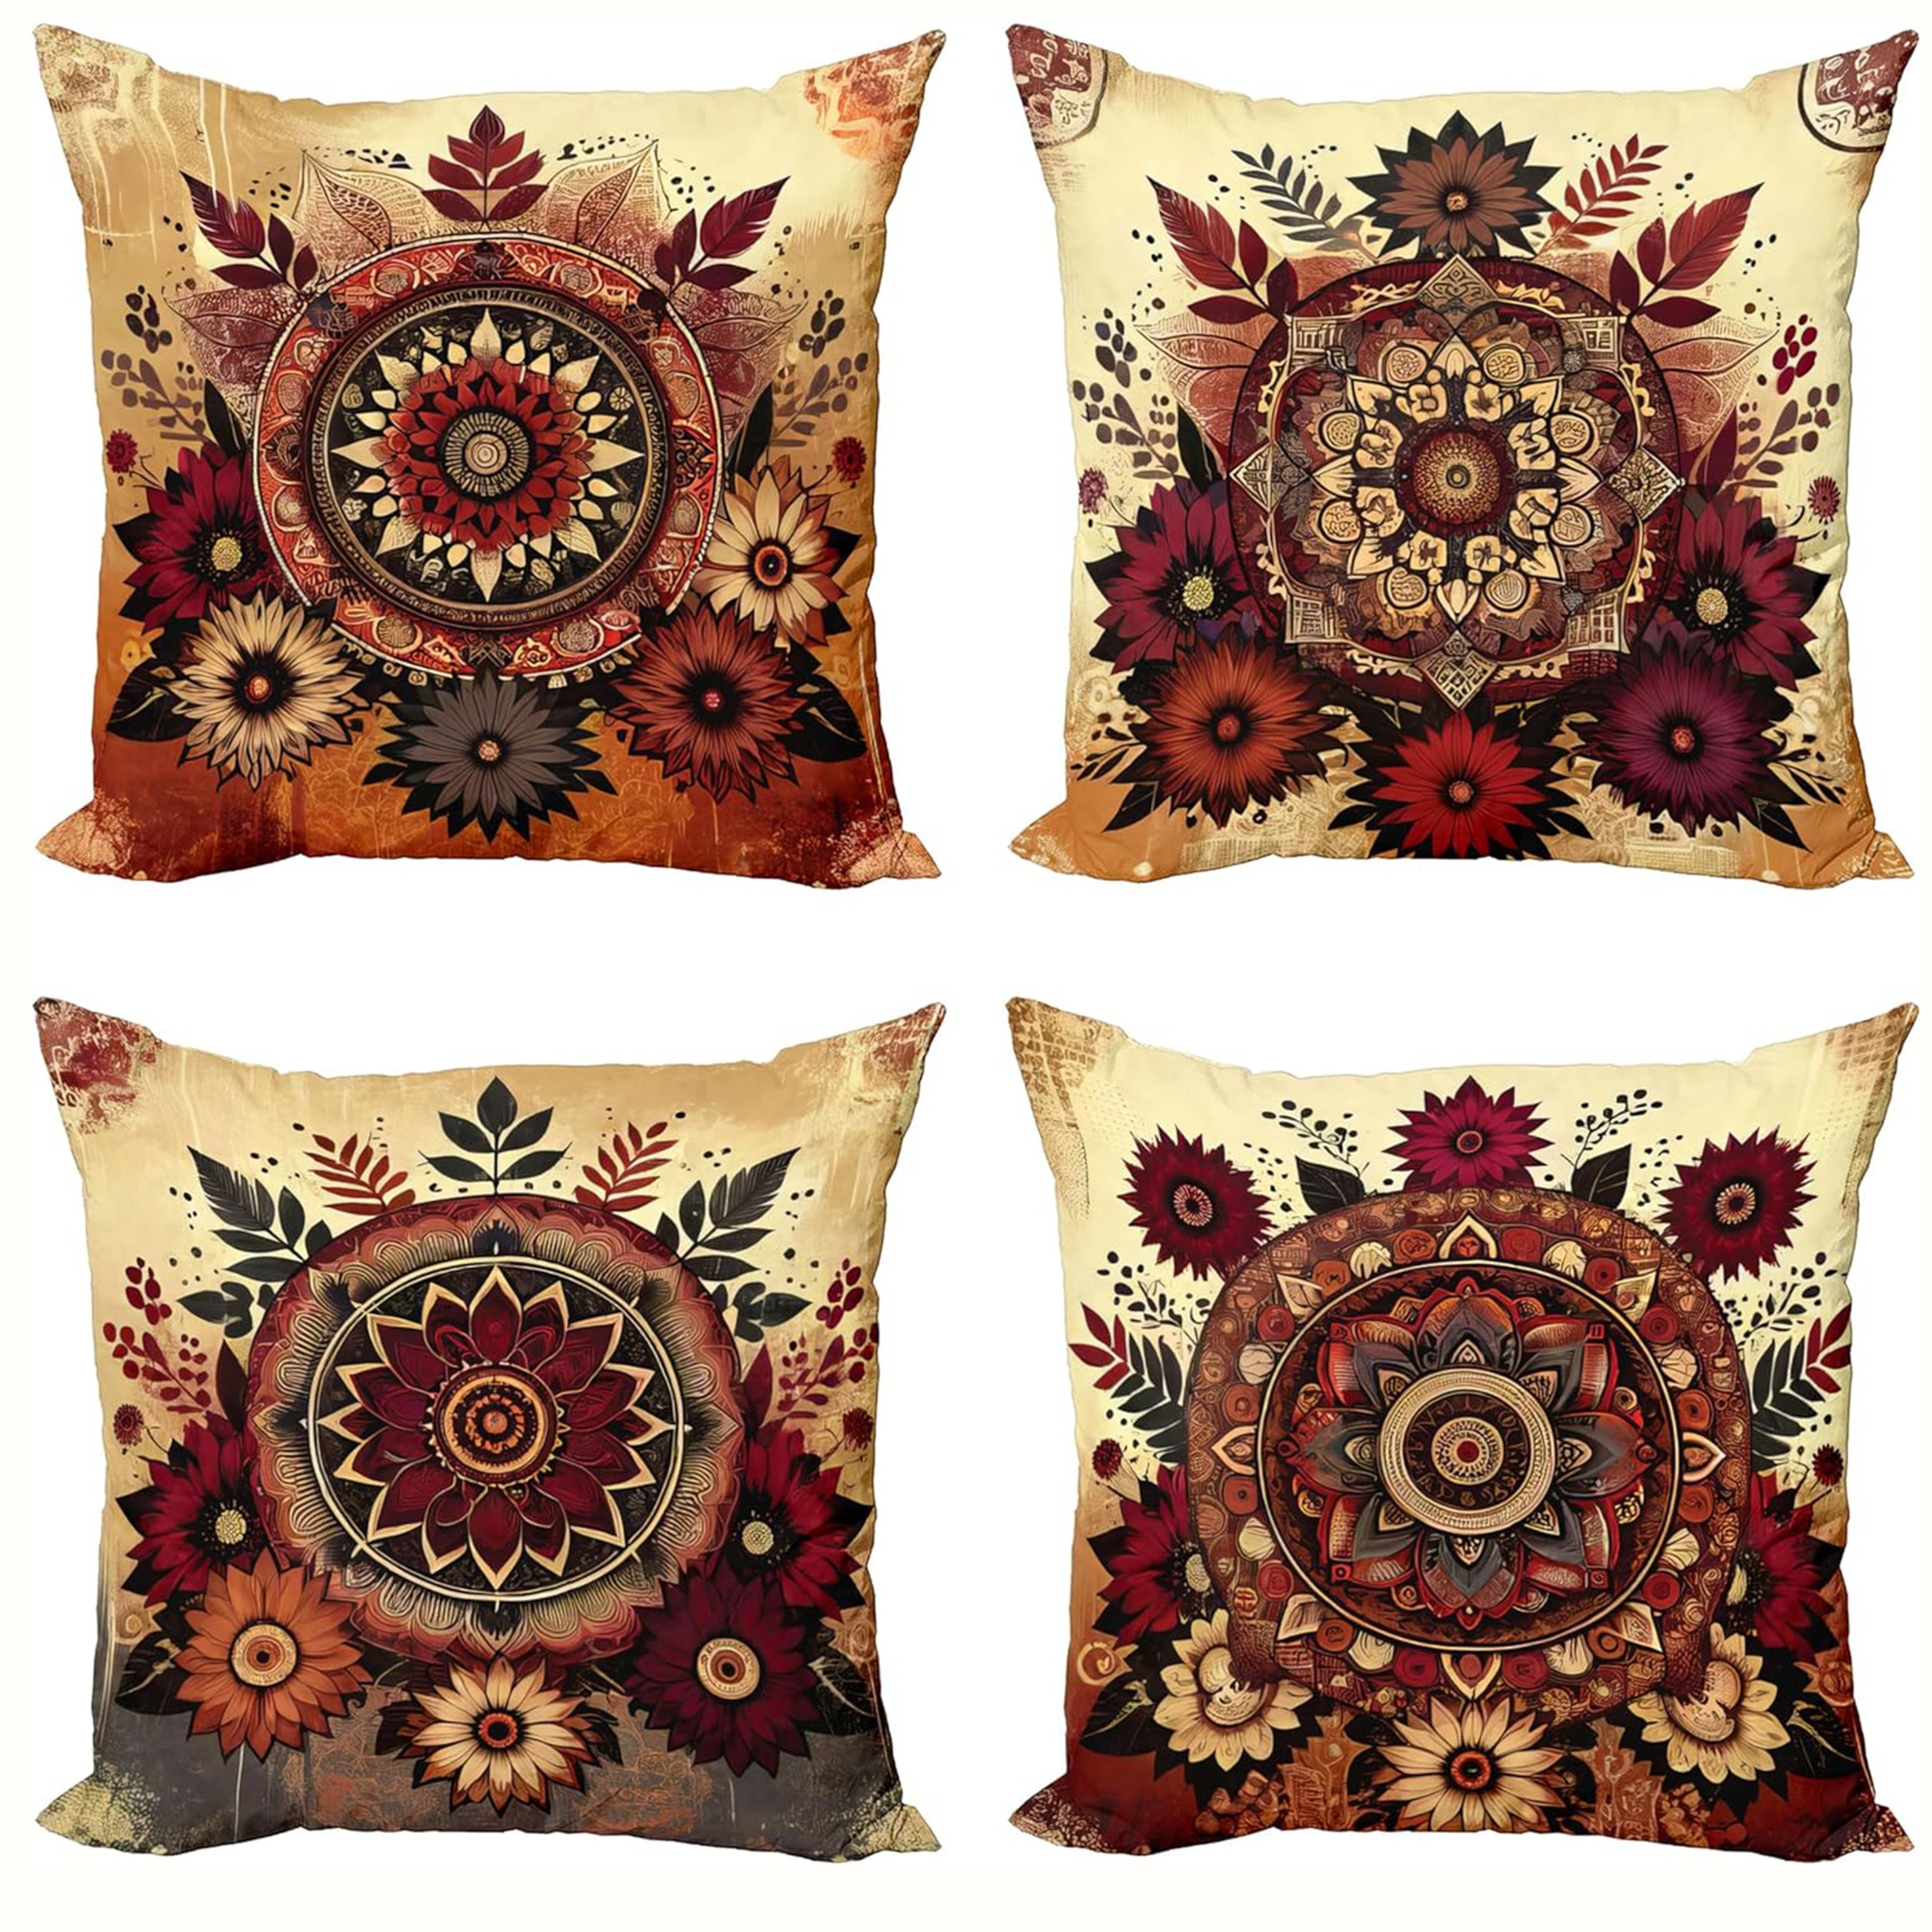 

4-piece Set Boho Mandala Throw Pillow Covers - Burnt Orange & Raspberry, Single-sided Design, Polyester, Zip Closure - Perfect For Living Room, Bedroom, Sofa Decor (16x16", 18x18", 20x20")